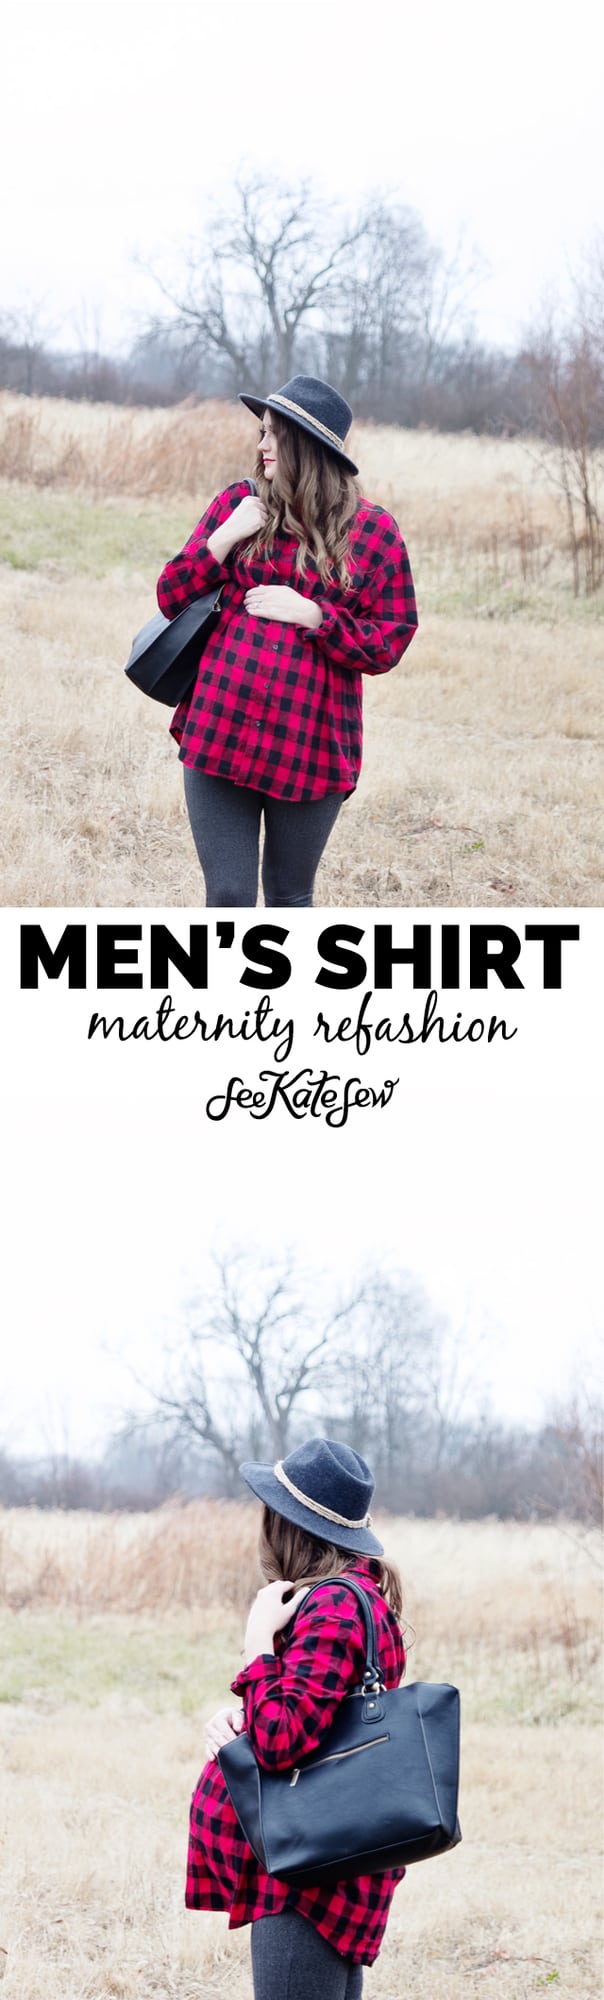 Men's shirt to maternity refashion